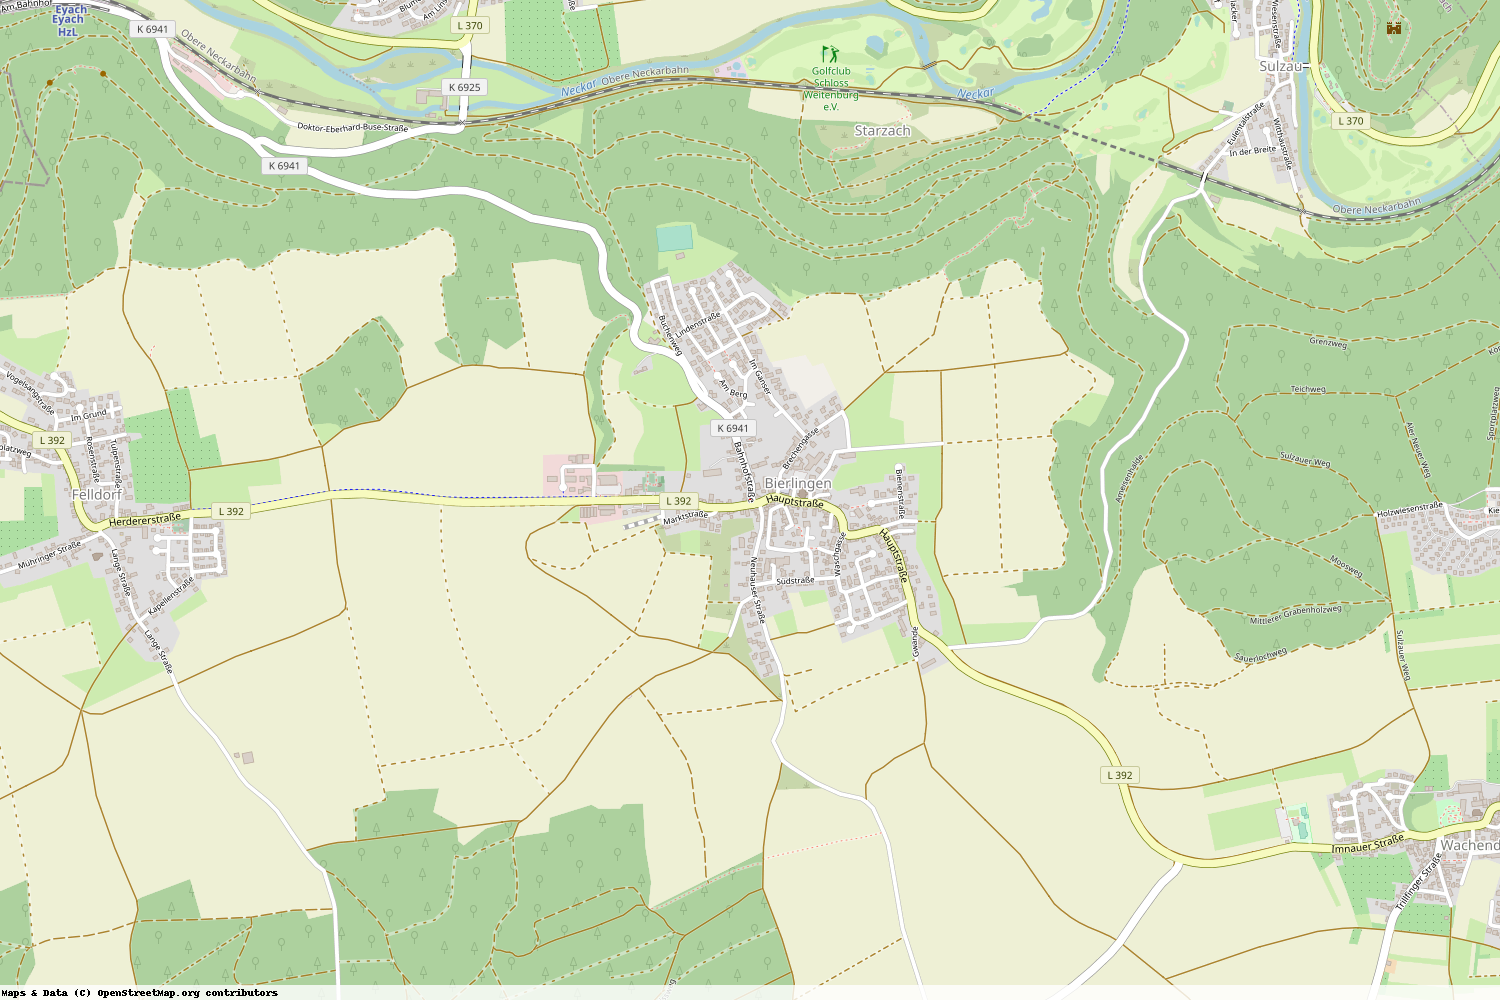 Ist gerade Stromausfall in Baden-Württemberg - Tübingen - Starzach?